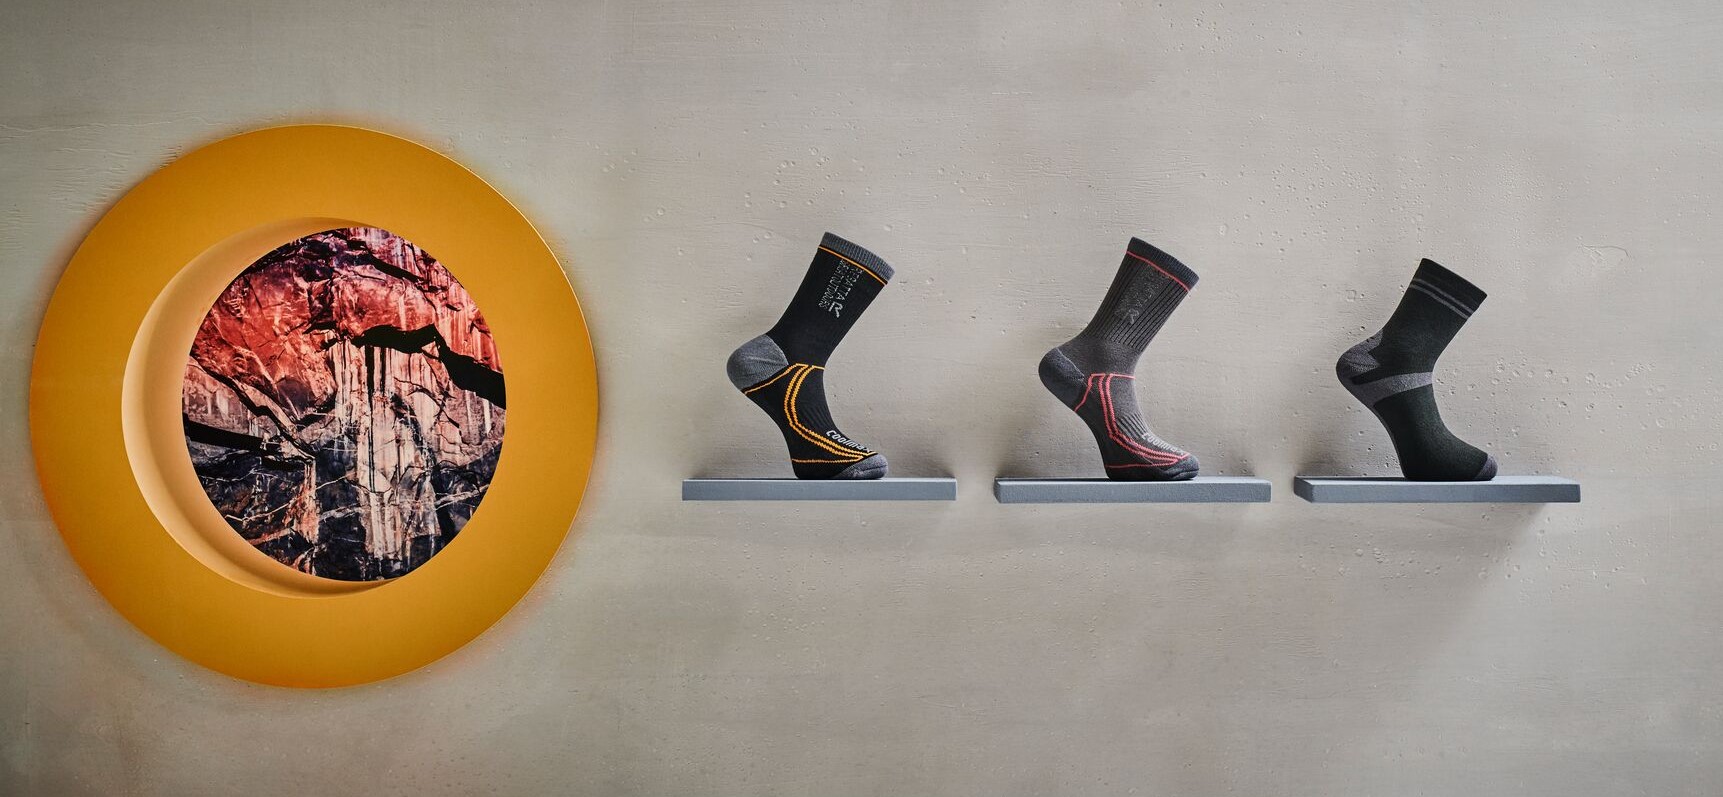 3 Black Walking socks on a display shelf